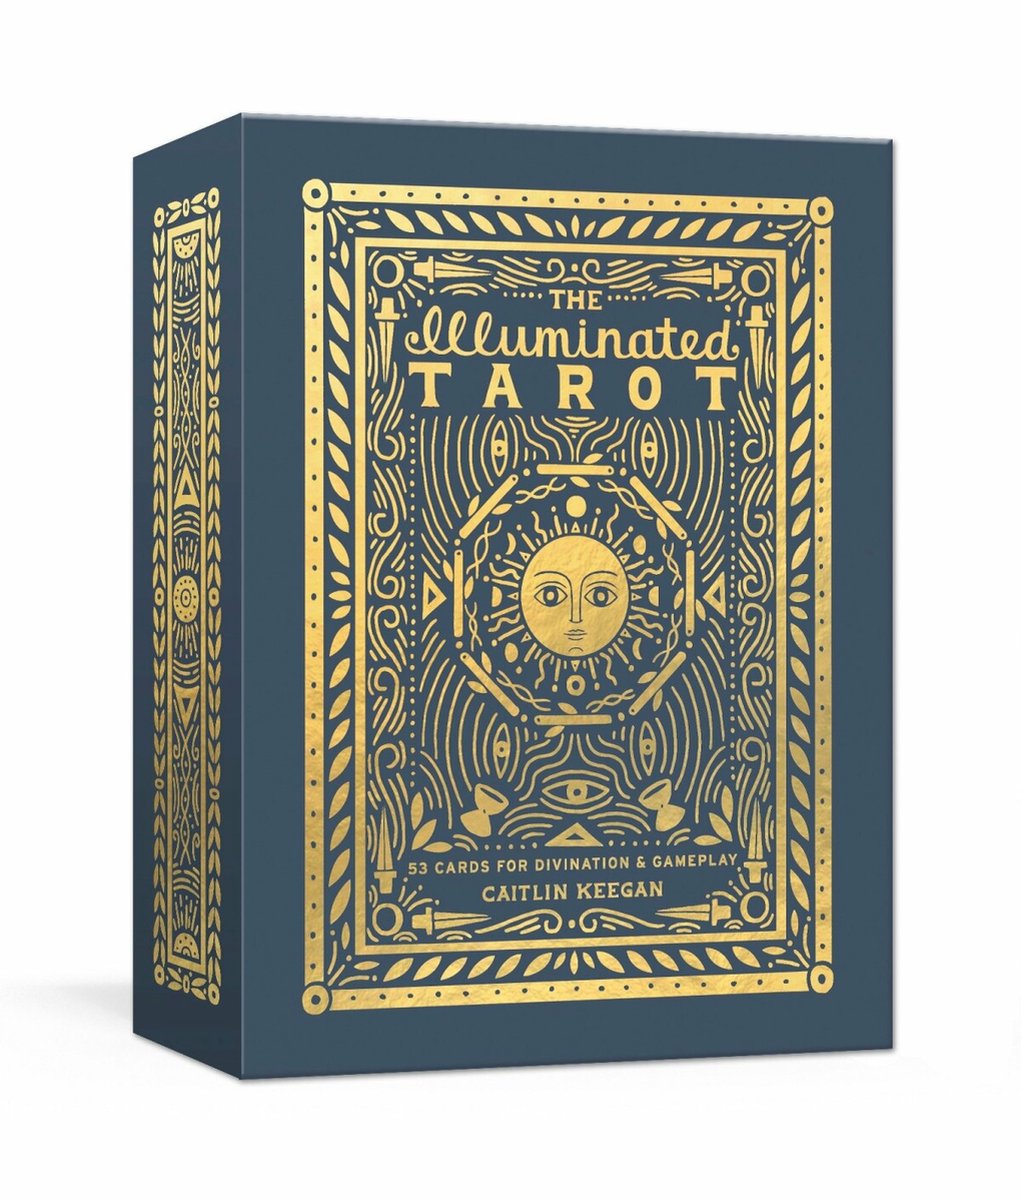 The Illuminated Tarot 53 Cards for Divination Gameplay - Caitlin Keegan